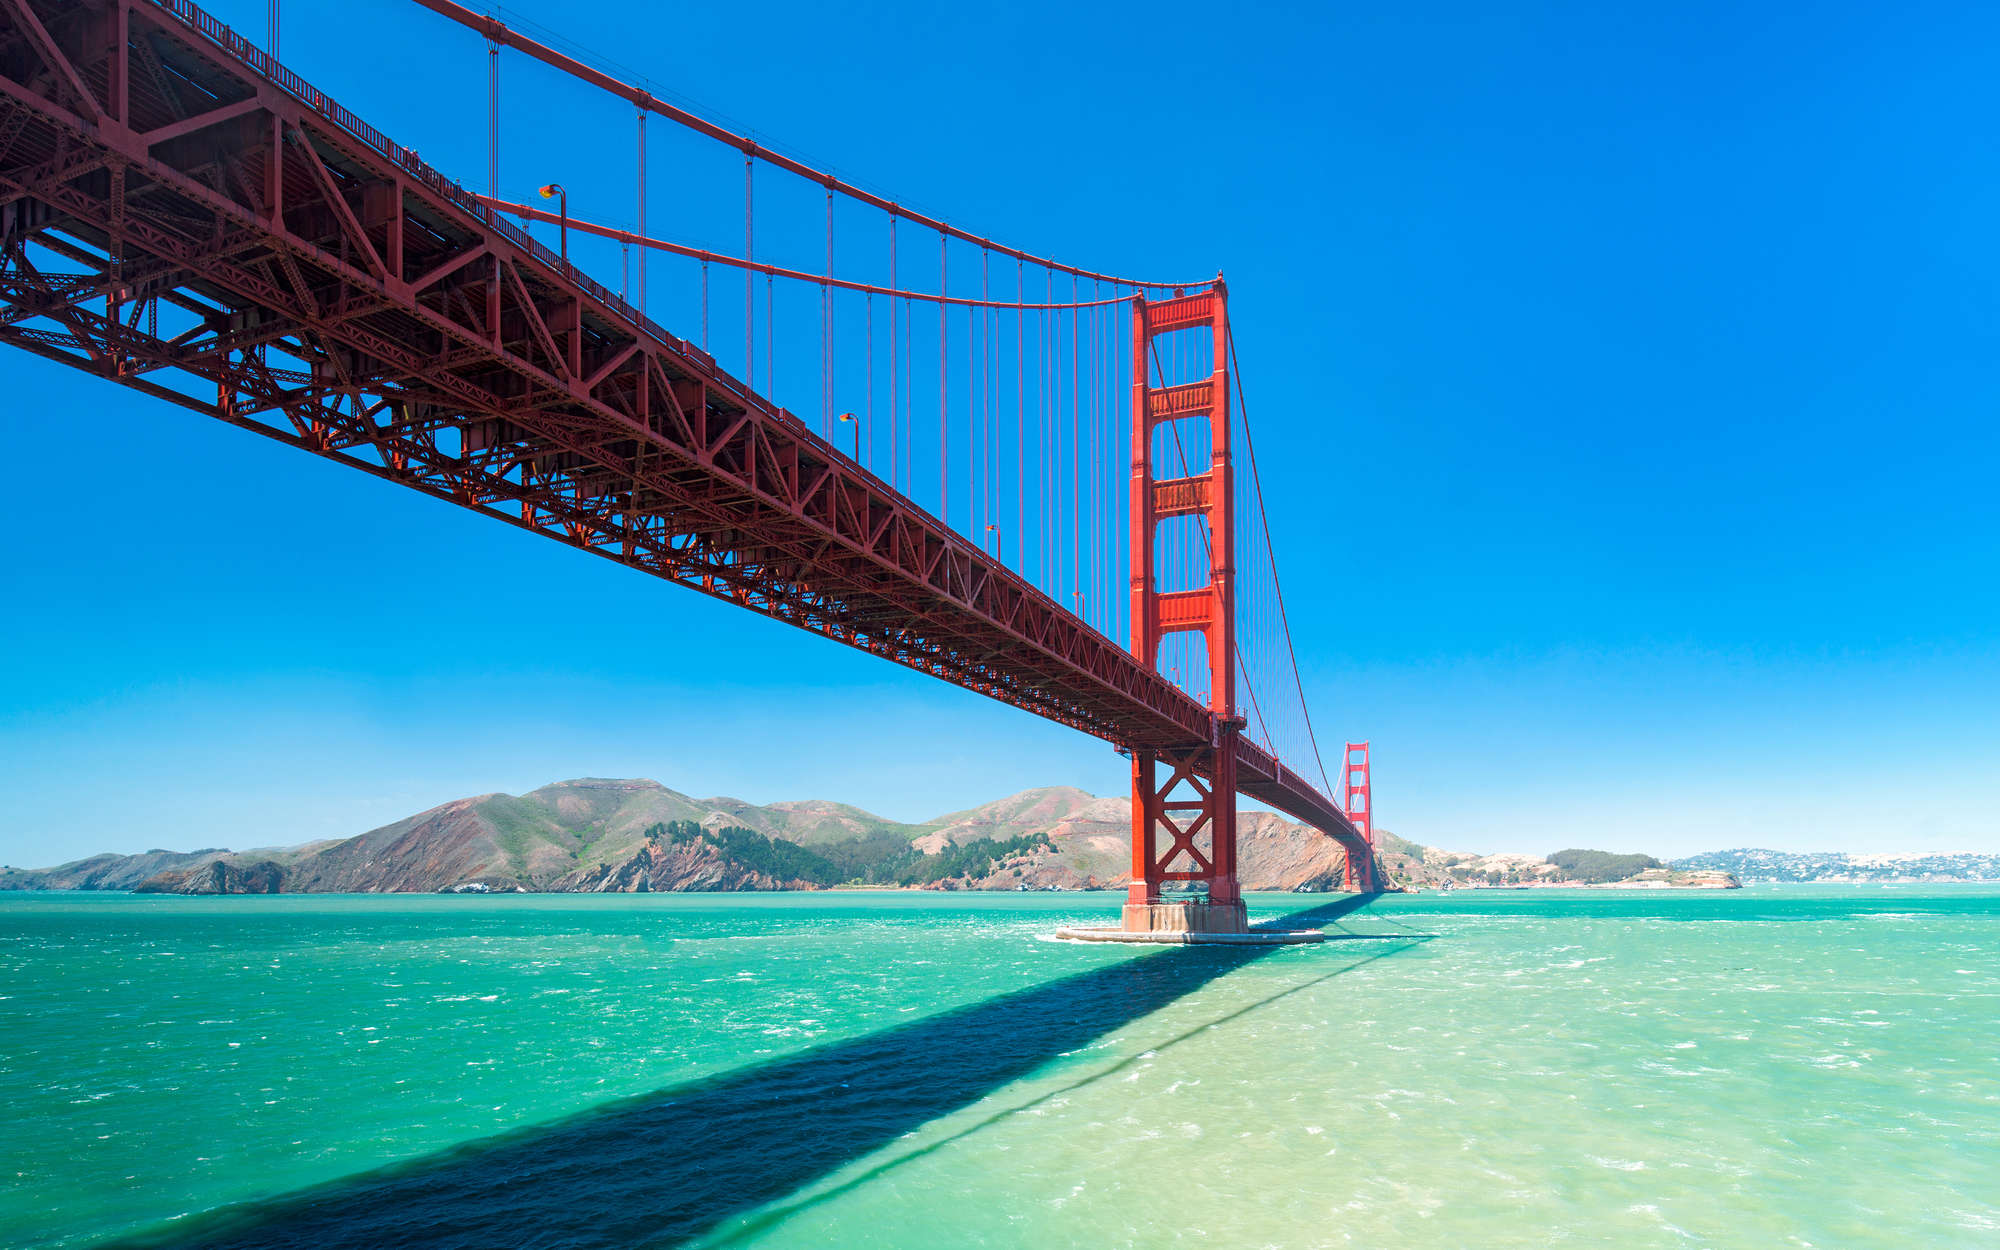             Golden Gate Bridge in San Francisco muurschildering - Mat glad vlies
        